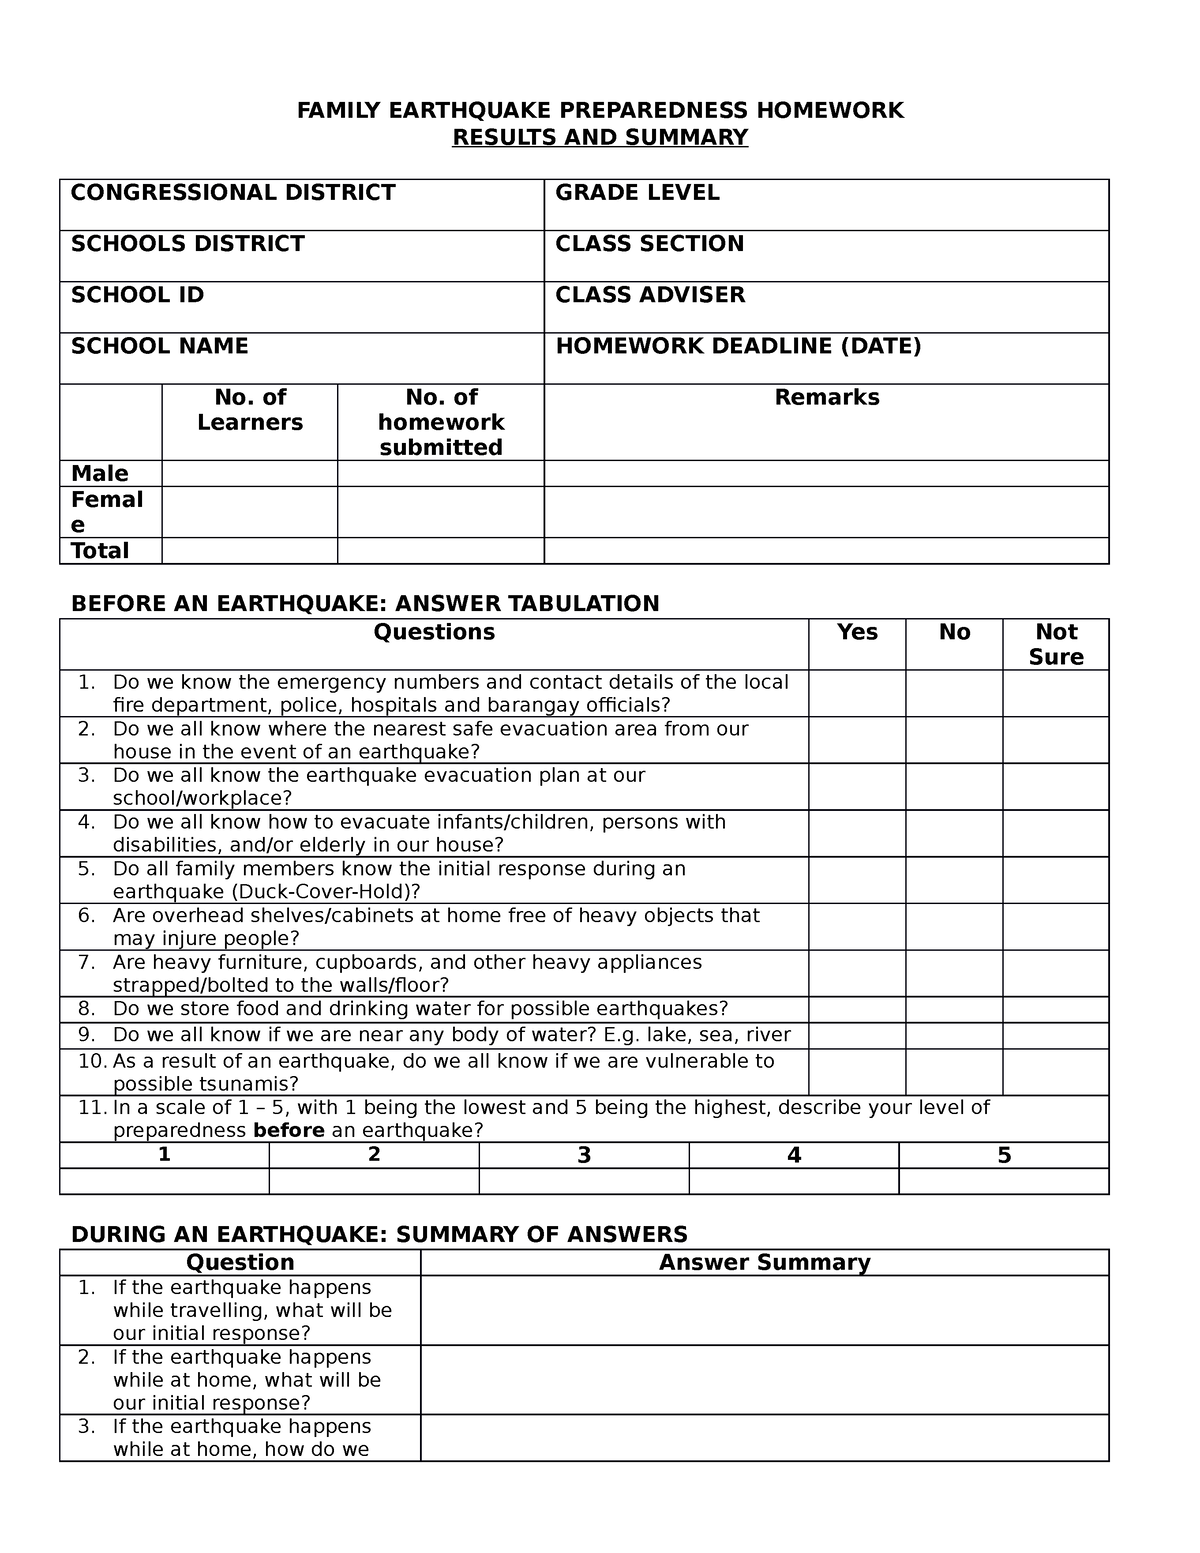 family earthquake preparedness homework questionnaire